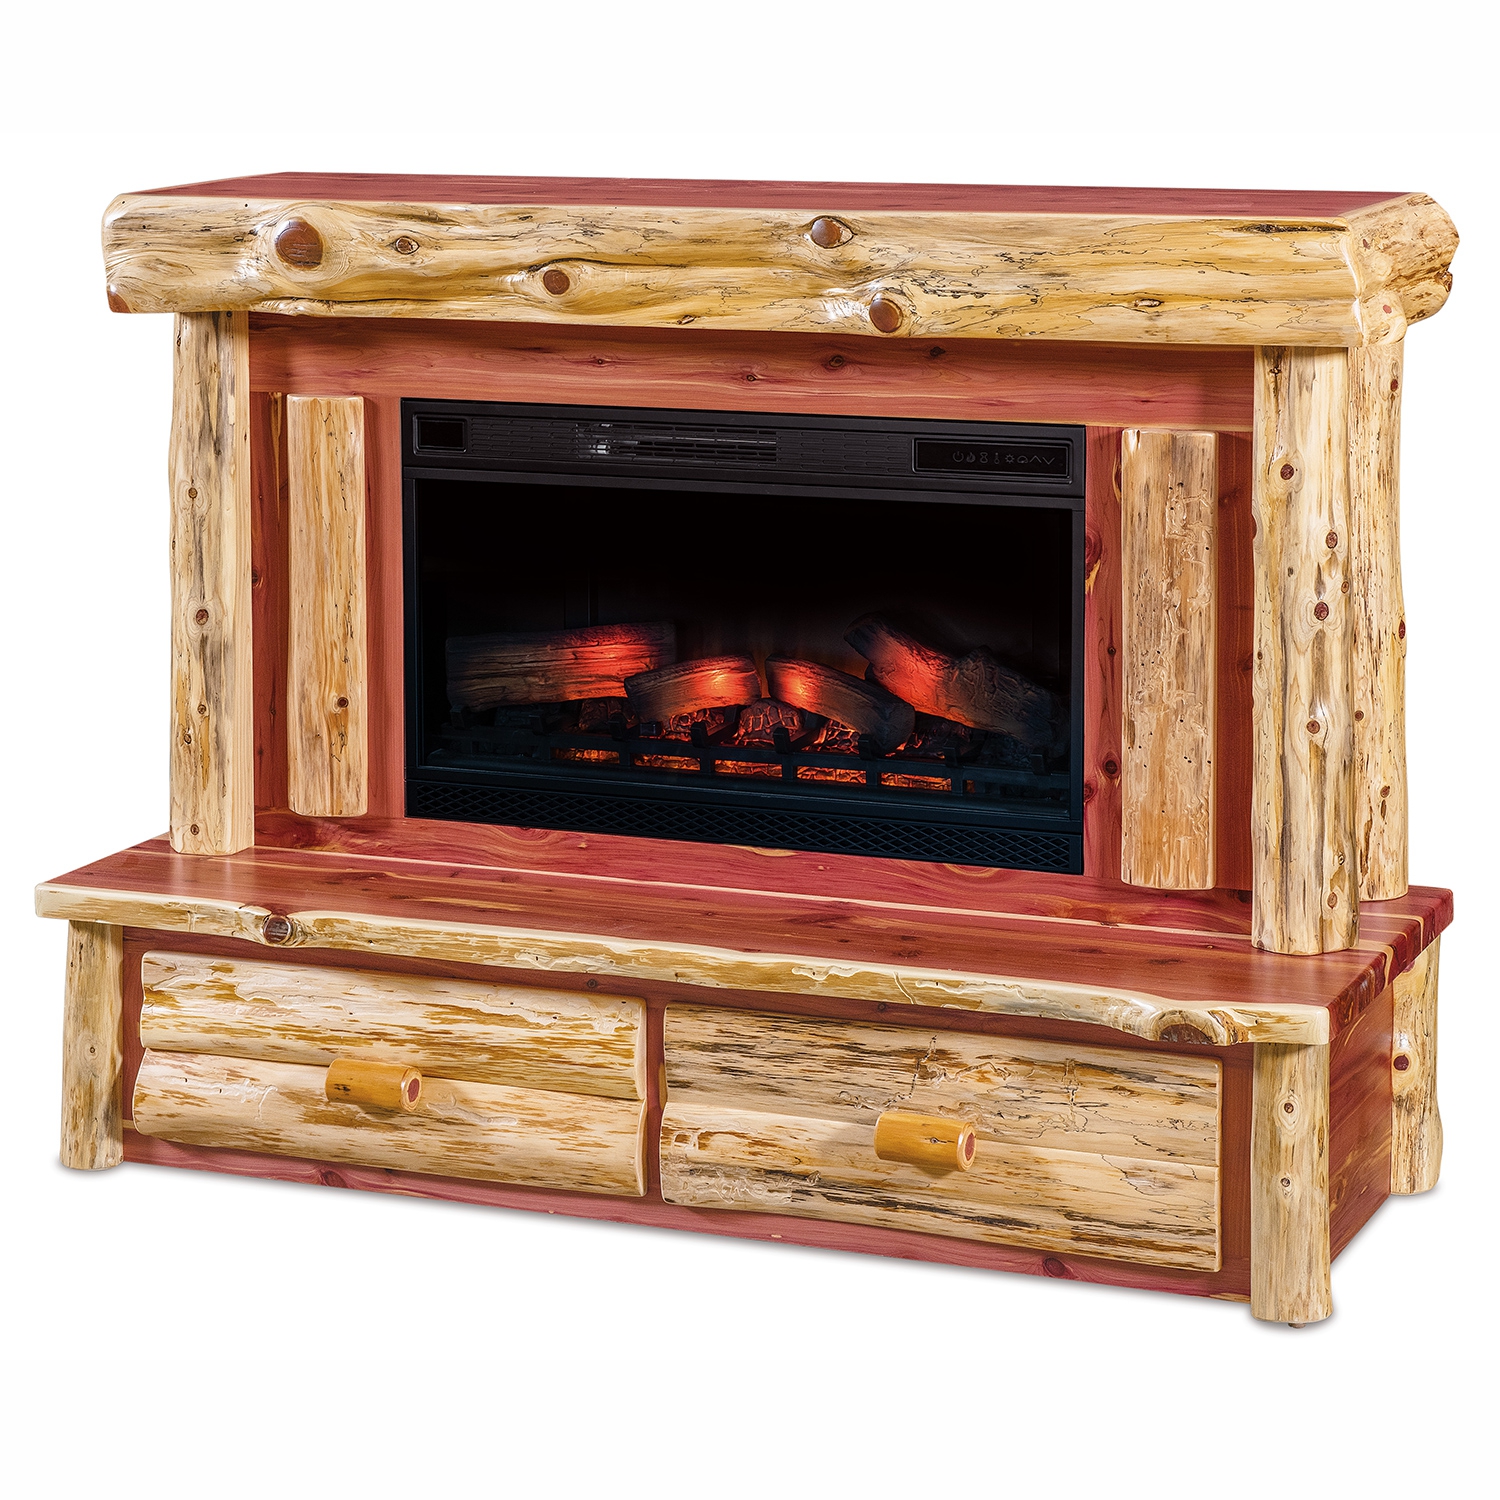 Image of Rustic Red Cedar Log Wall Fireplace